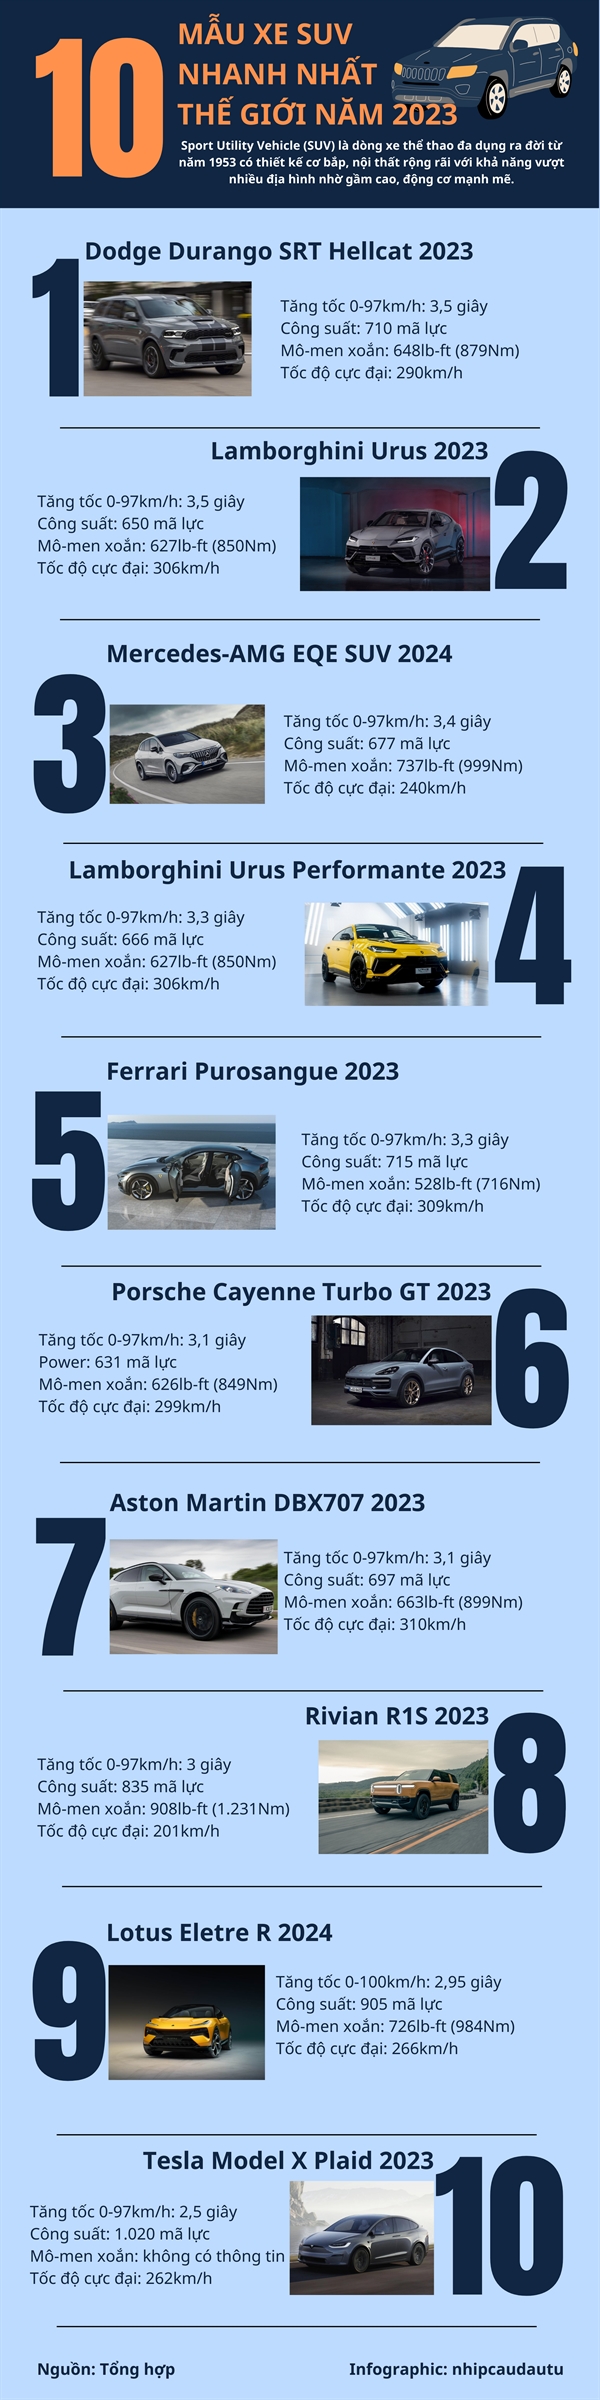 [Infographic] Top 10 mau SUV nhanh nhat the gioi nam 2023